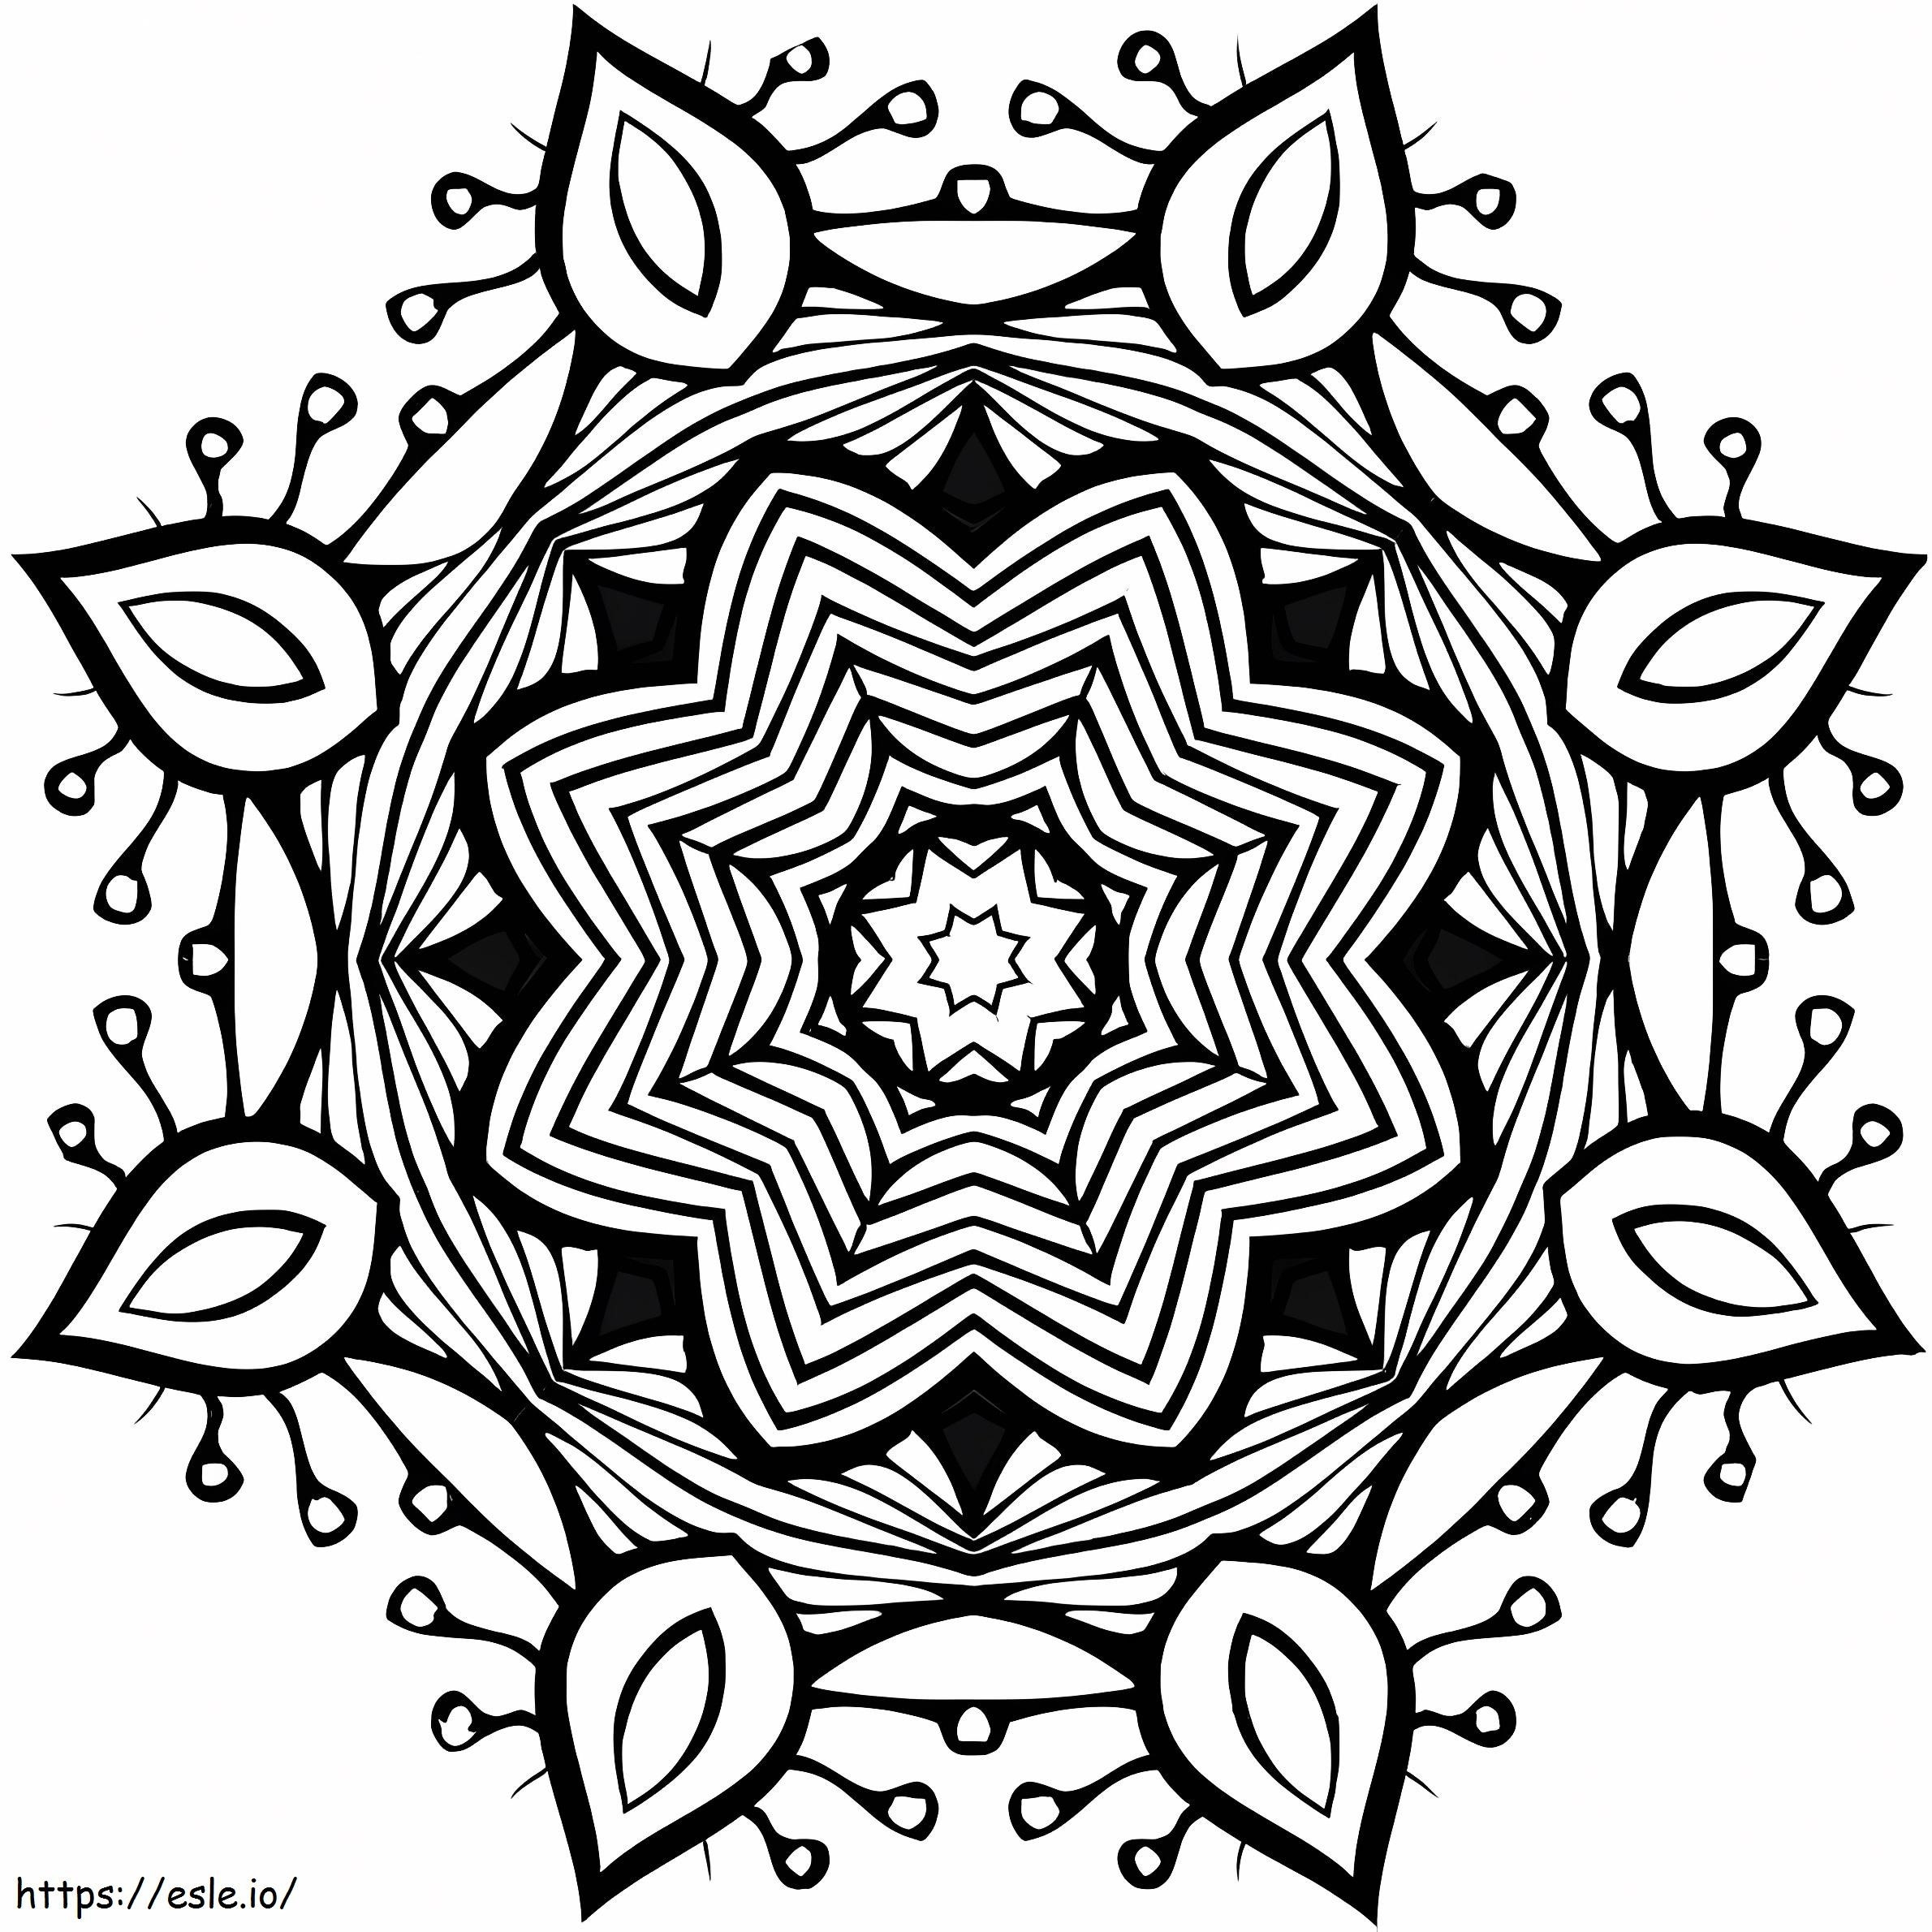 Komplexes Mandala ausmalbilder